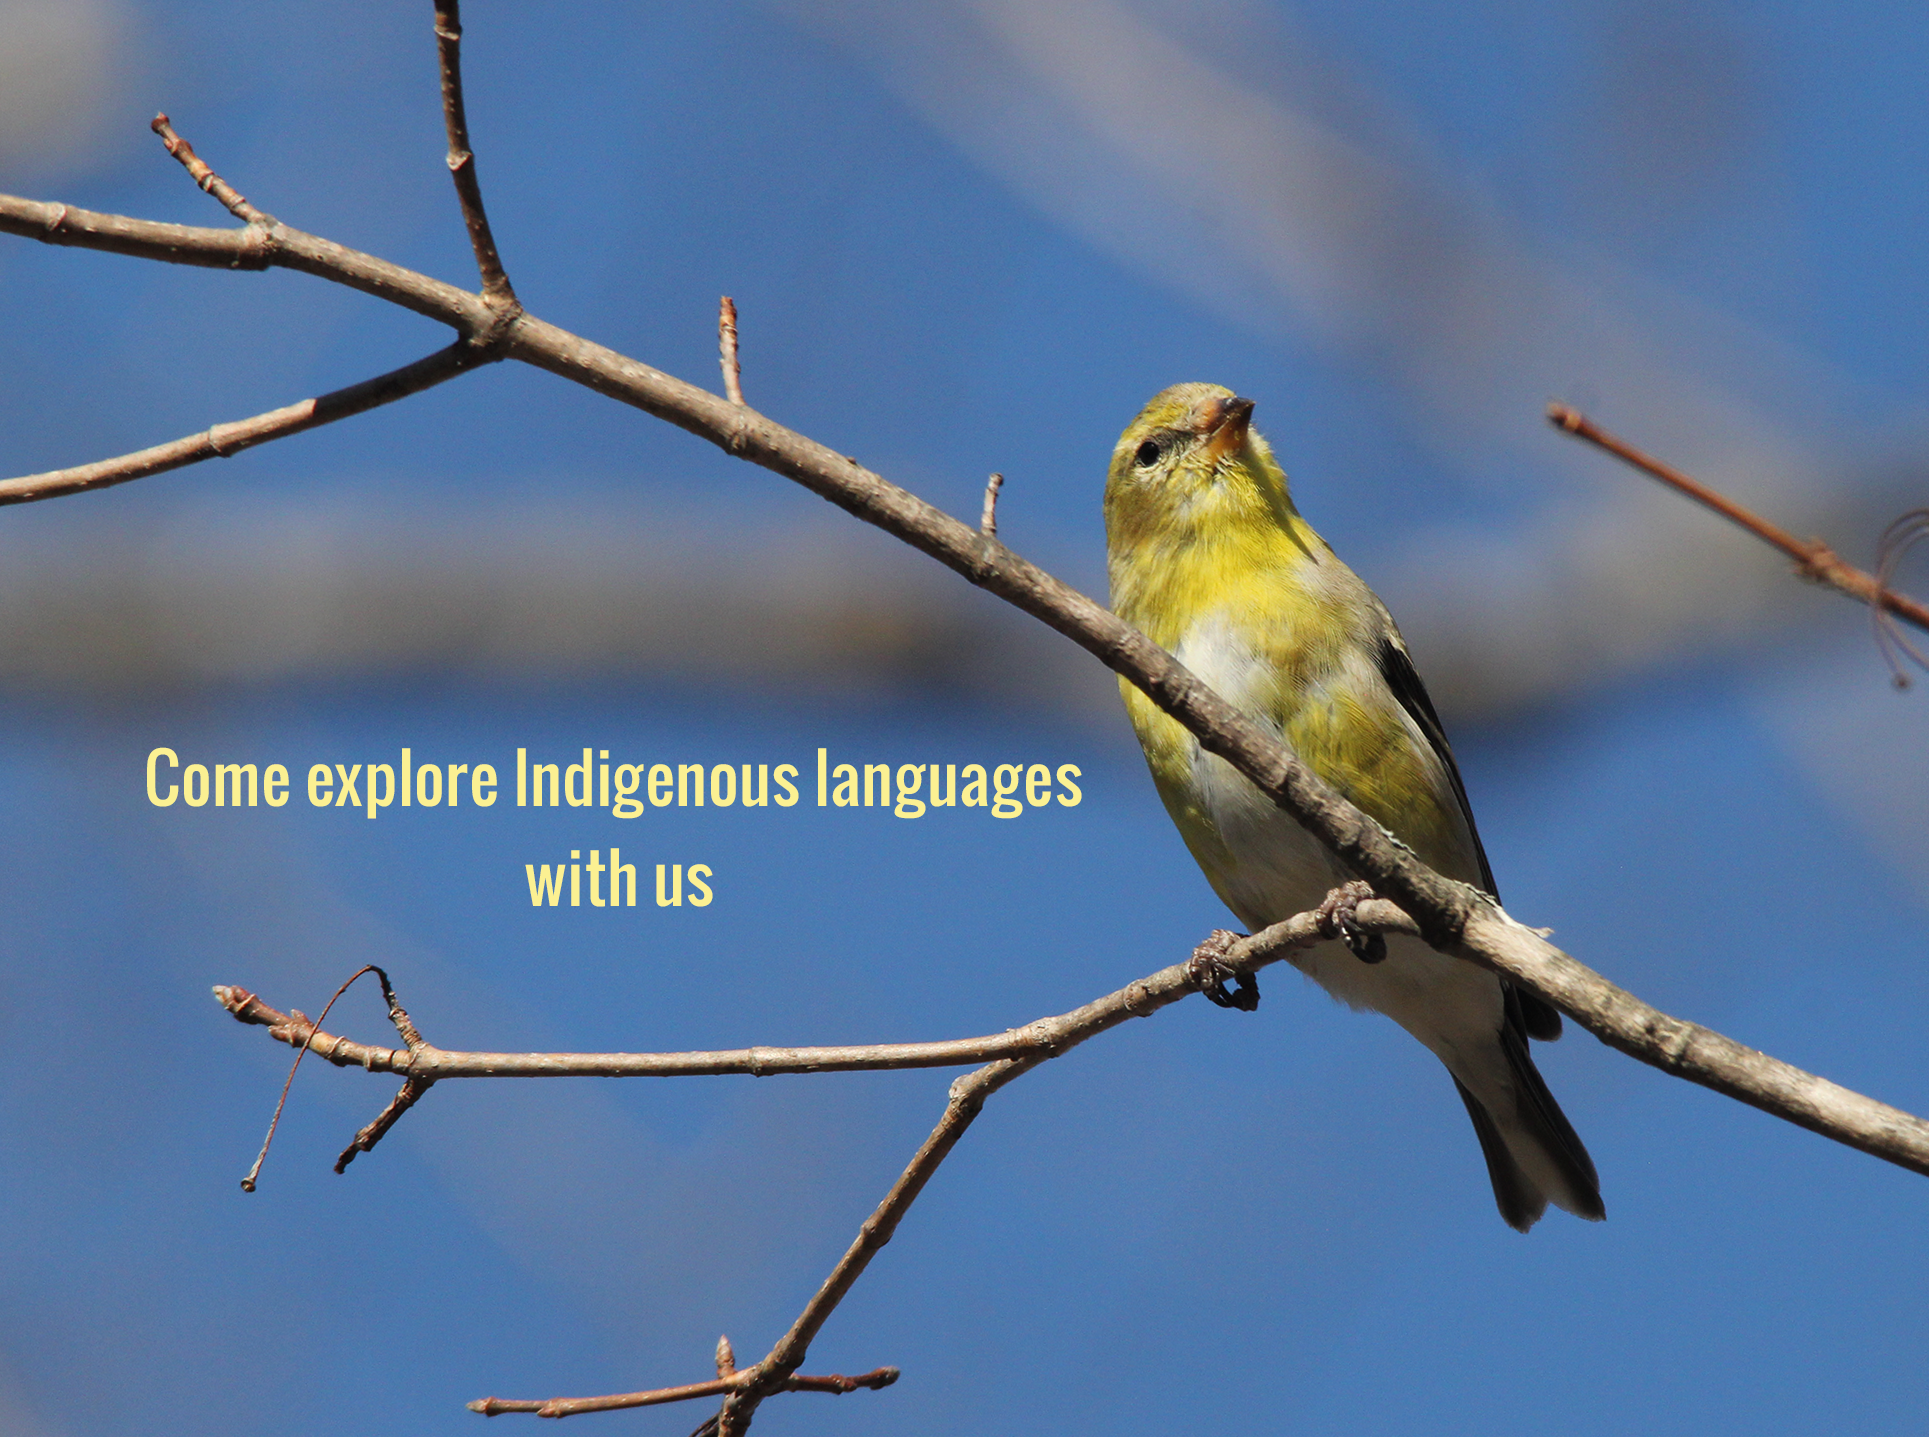 Come explore Indigenous languages with us